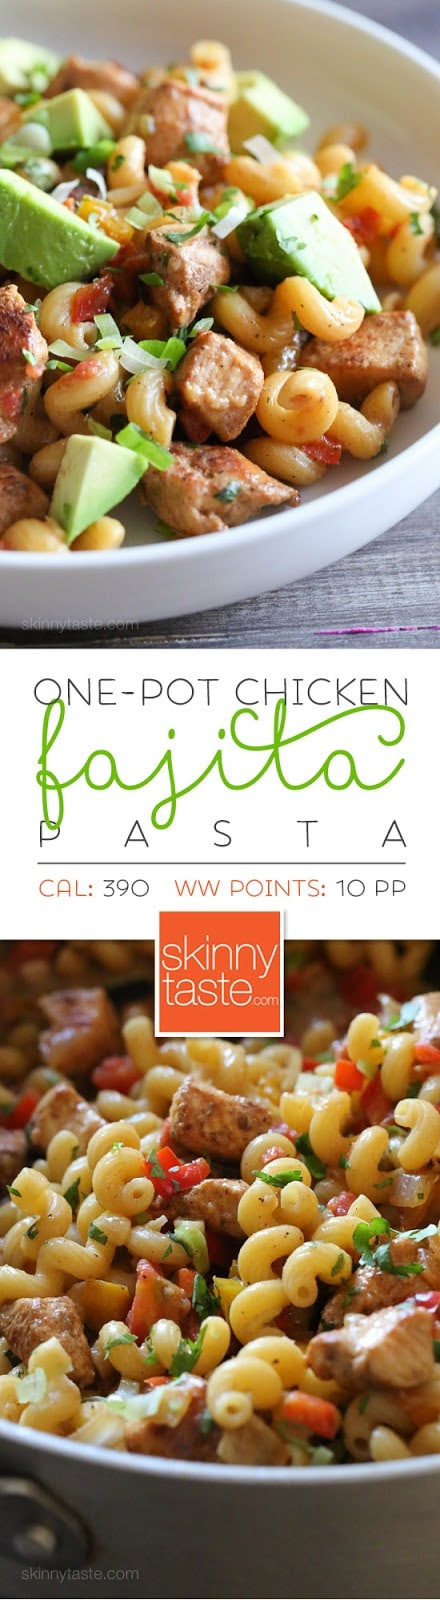 Skinnytaste One Pot Spaghetti
 e Pot Chicken Fajita Pasta